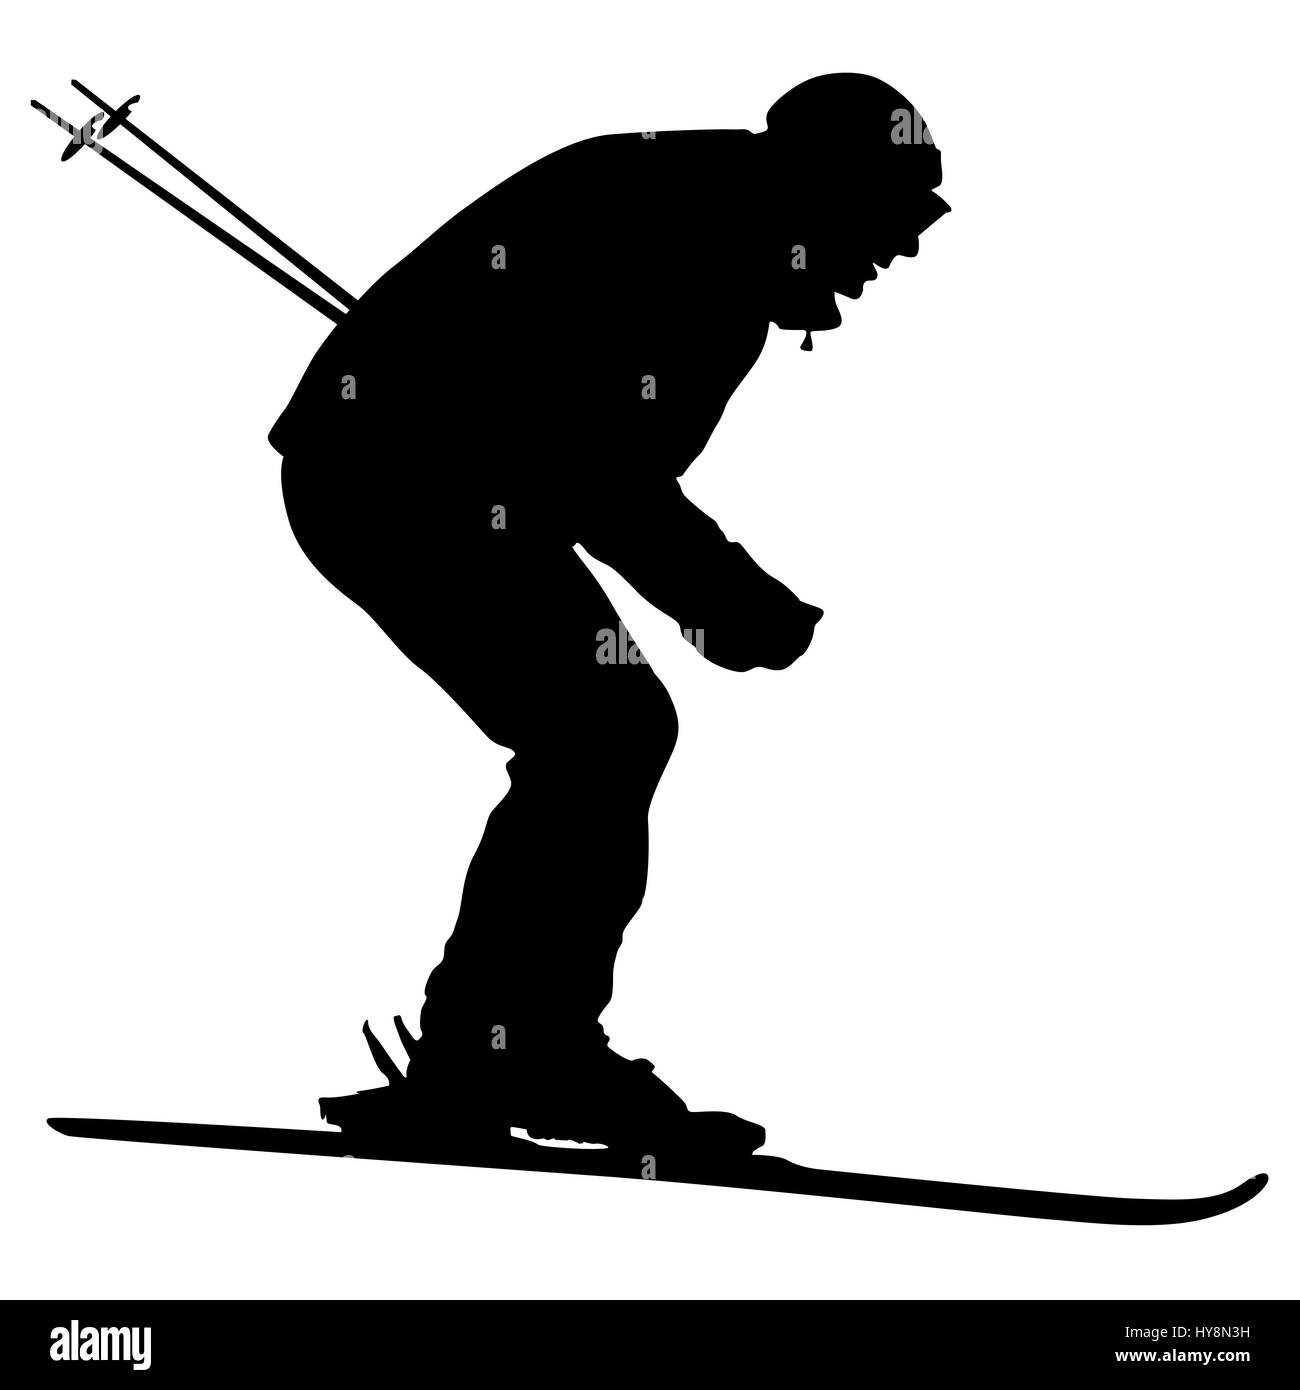 Berg Ski Hang hinunter zu beschleunigen. Sport-silhouette Stockfoto